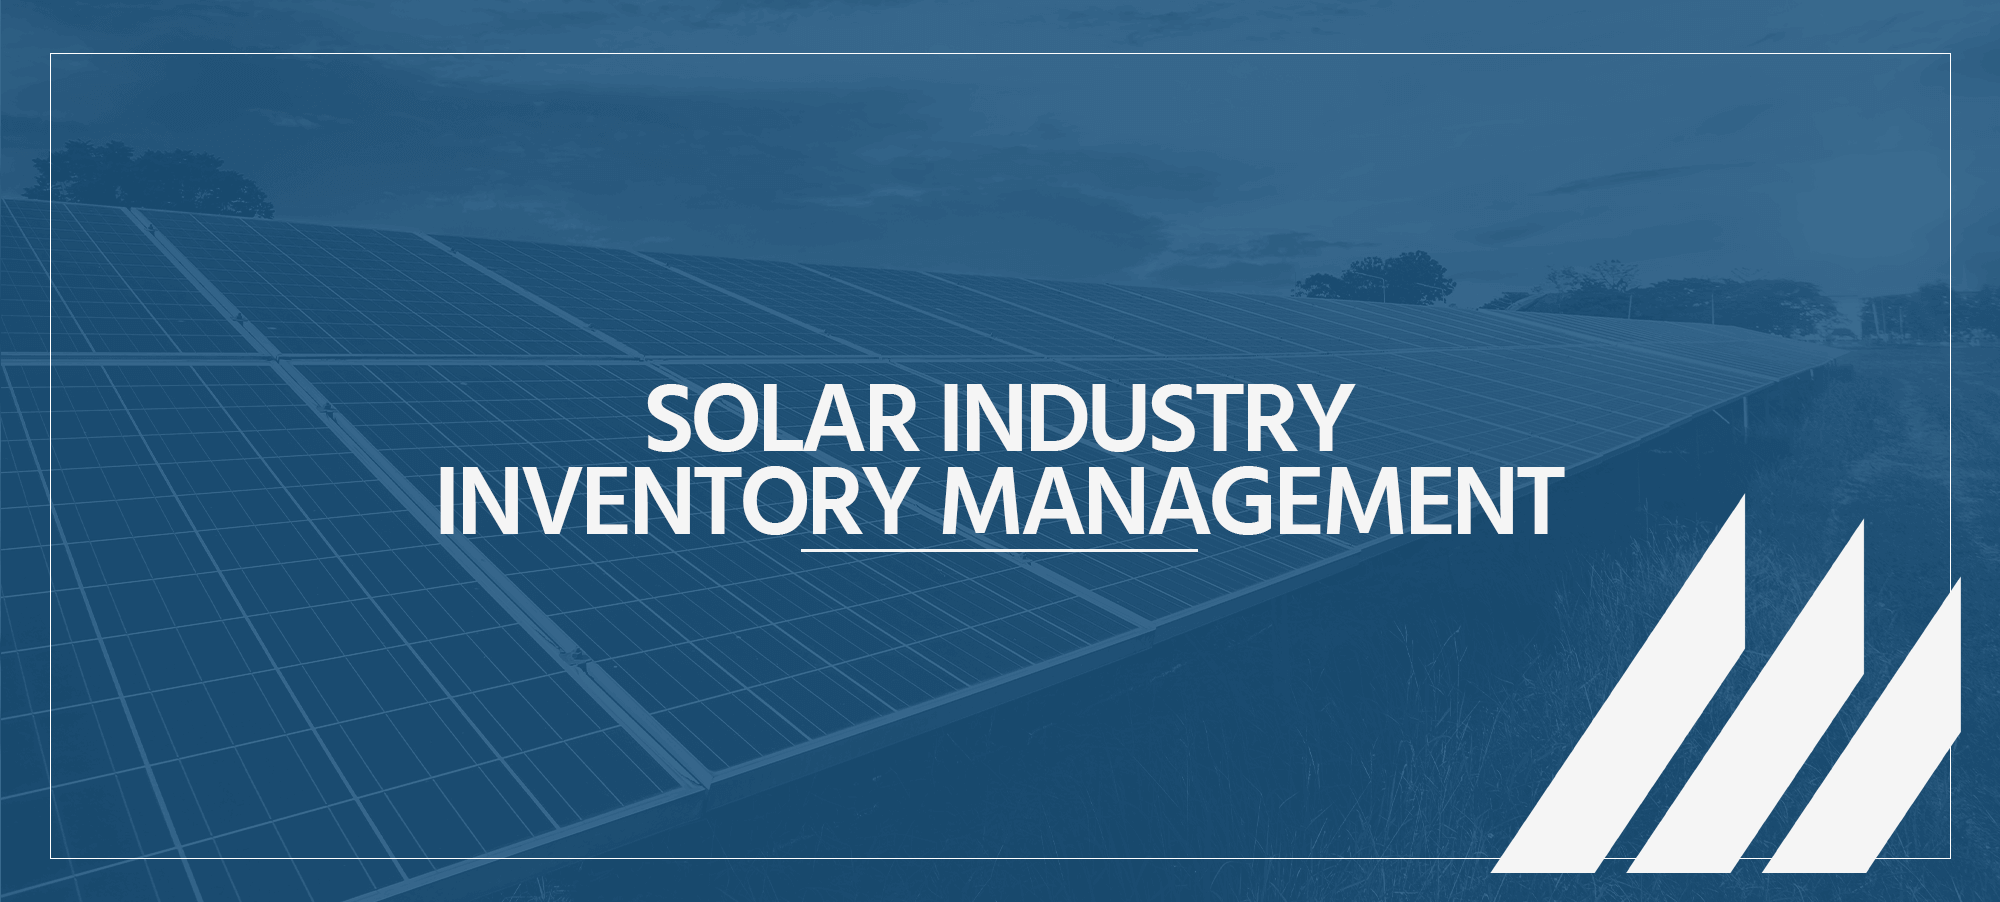 solar industry inventory management header image